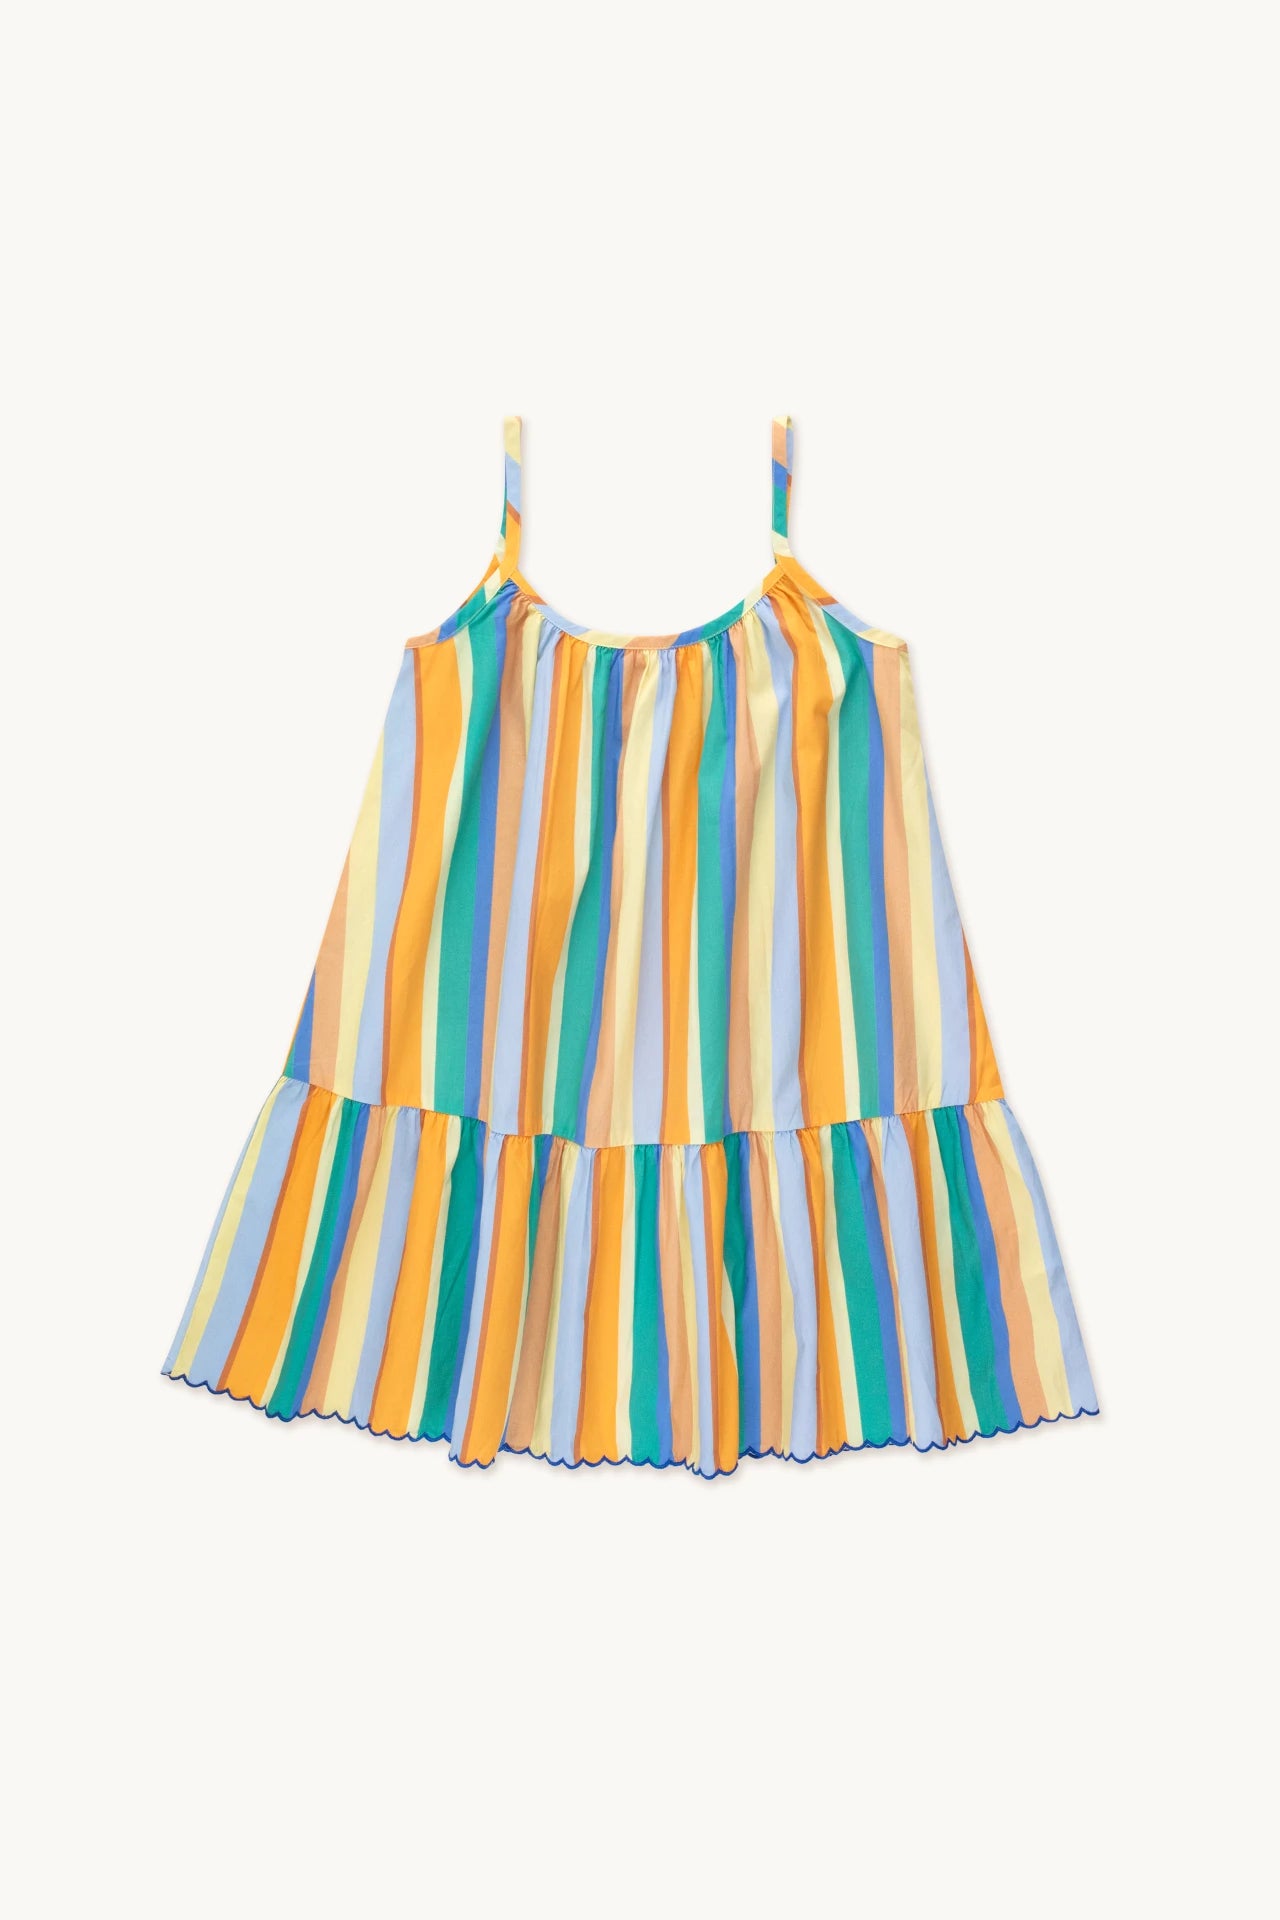 Tiny Cottons multicolor stripes dress